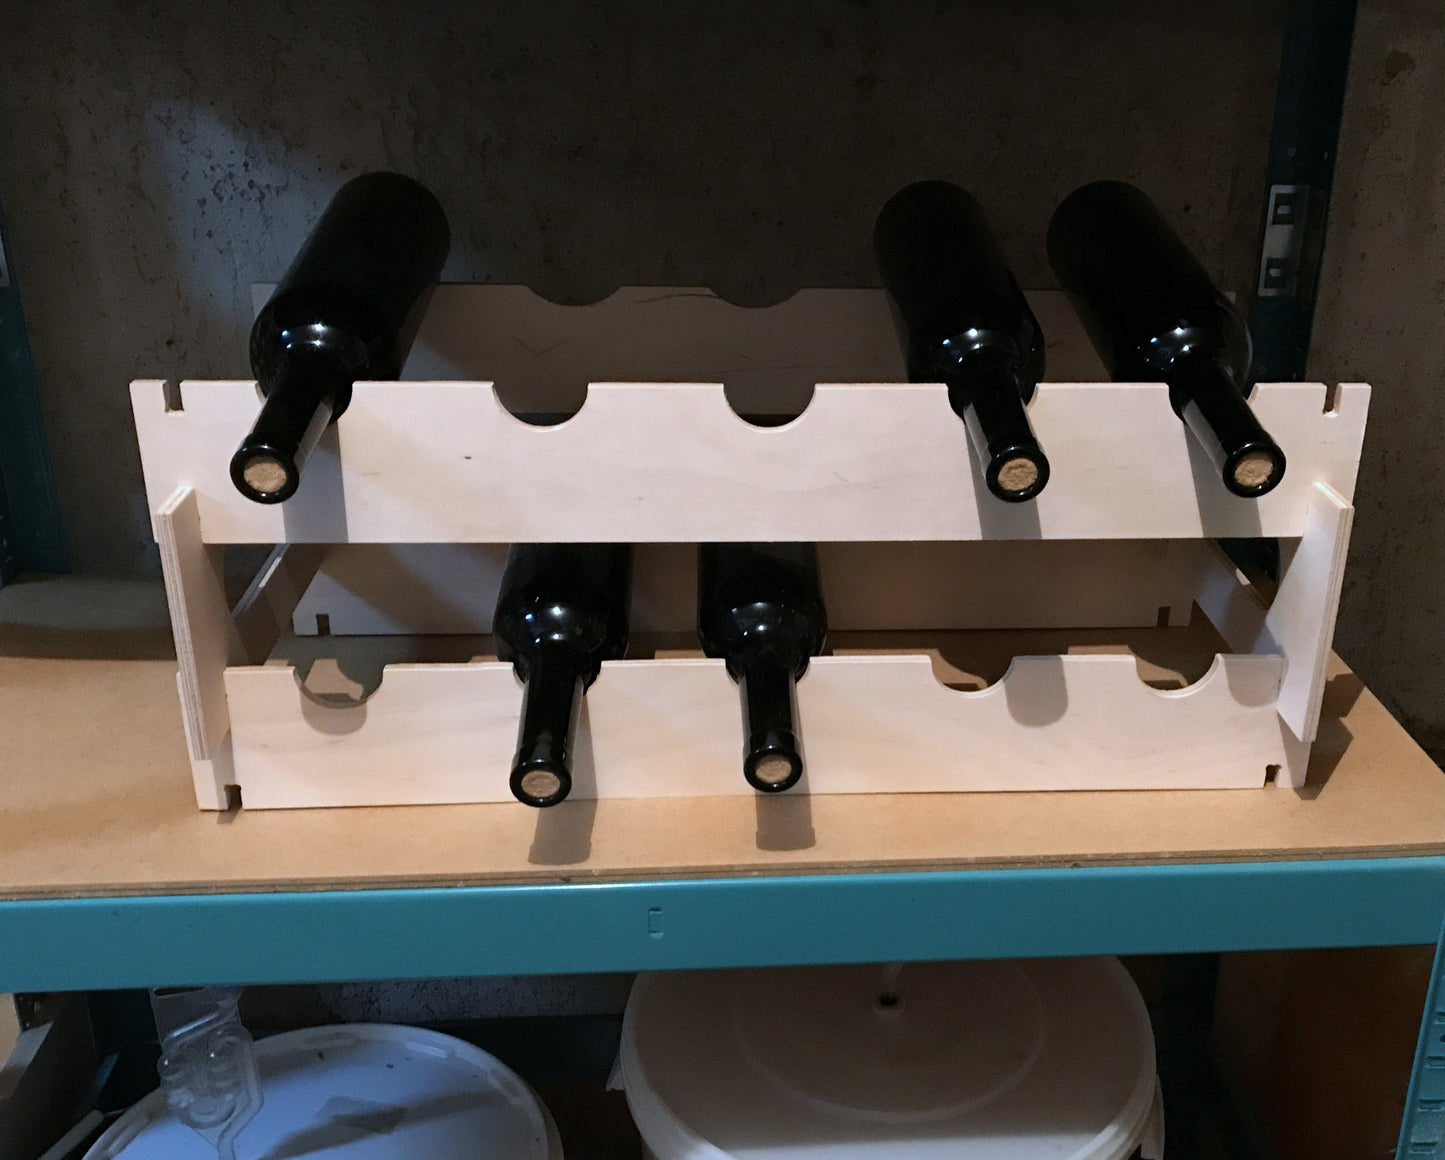 Modular, quick assembly wine rack 19 cm. x 30 cm x 60 cm. (12 or more bottles).